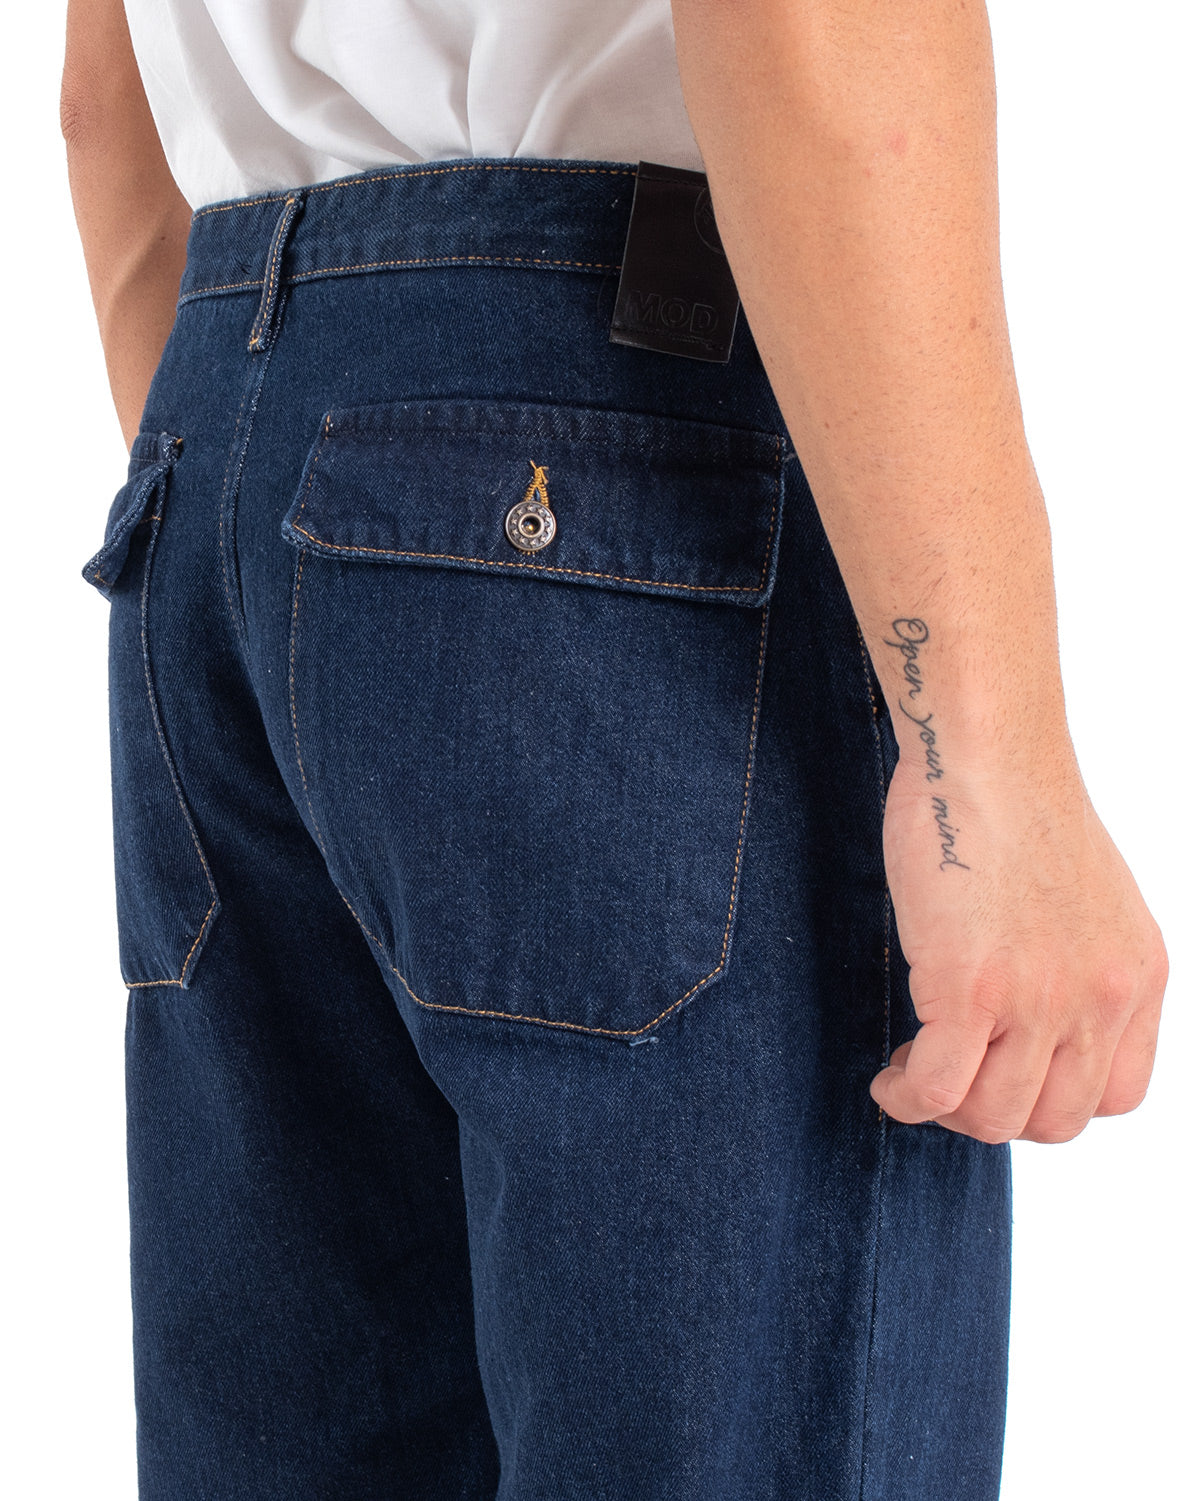 Pantaloni Jeans Uomo Carpenter Denim Scuro Tasca America GIOSAL-P5477A